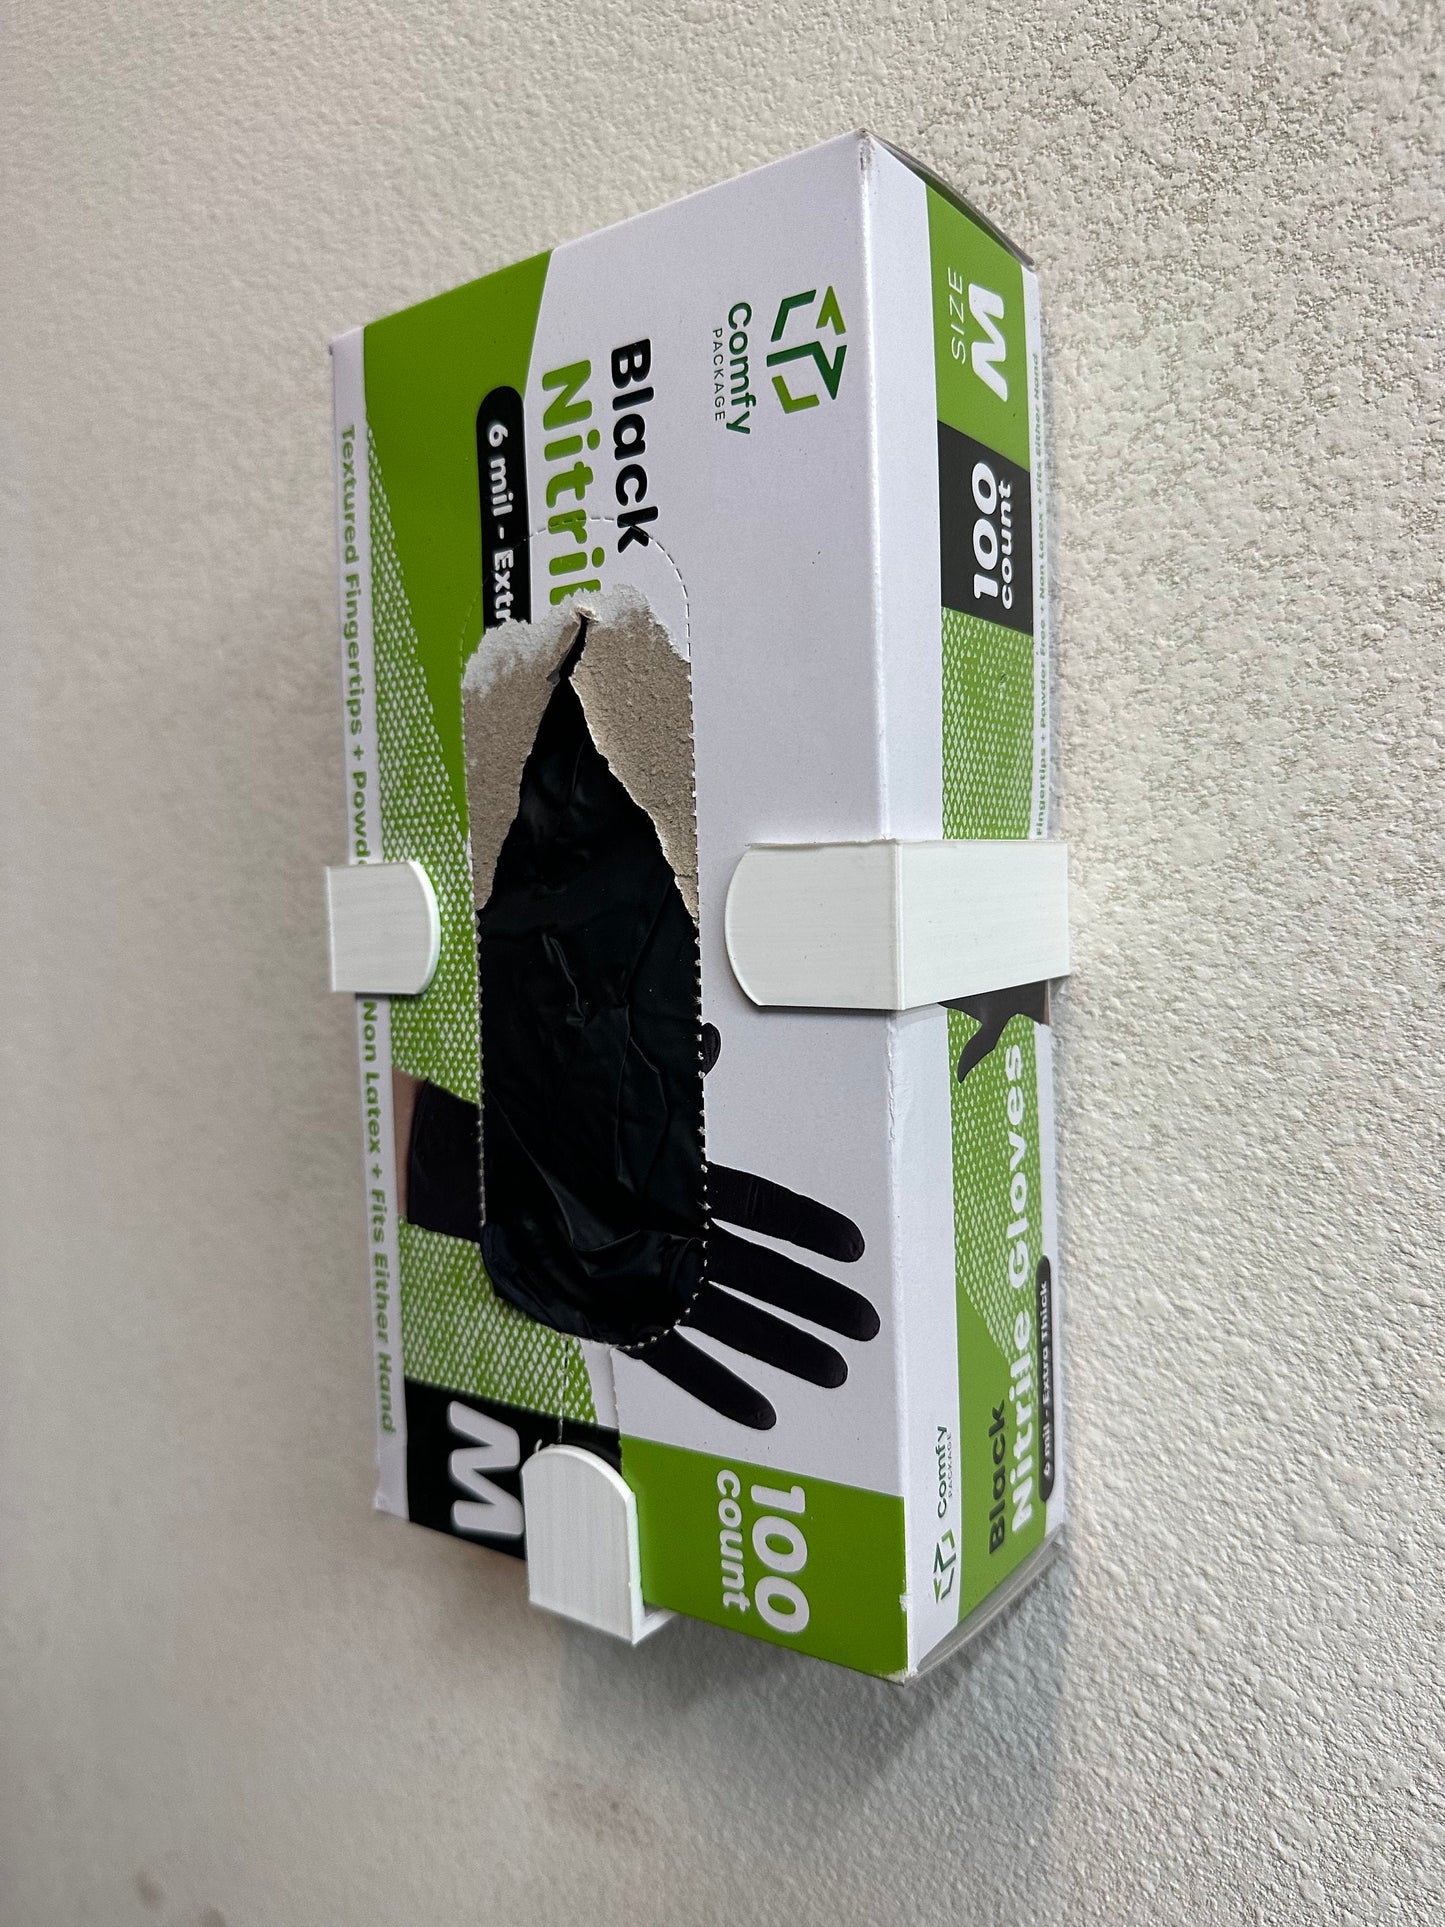 Disposable glove dispenser box